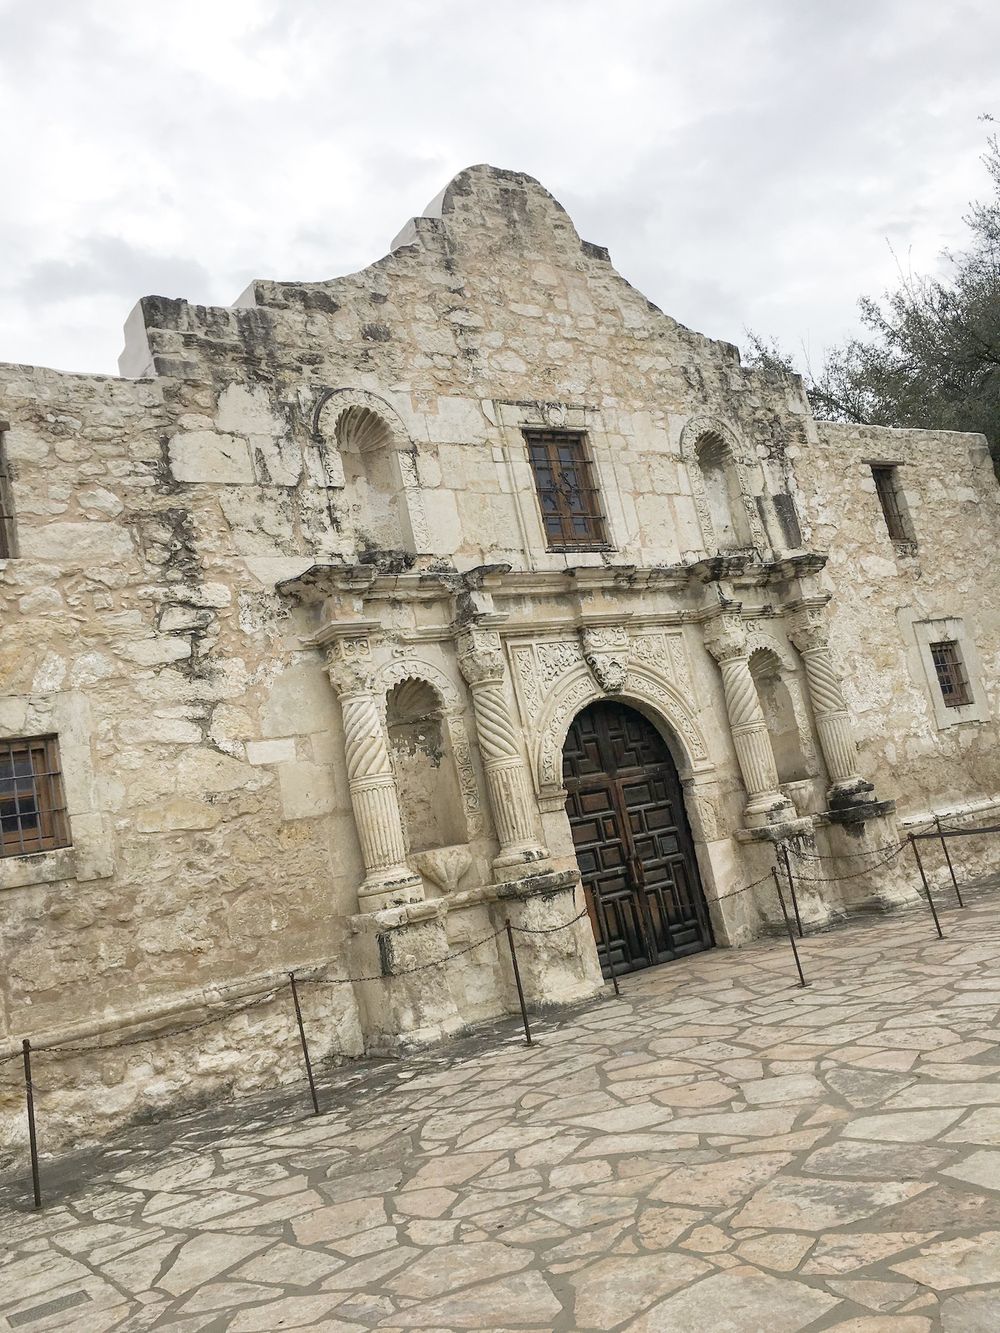 The Alamo in February, San Antonio, Texas